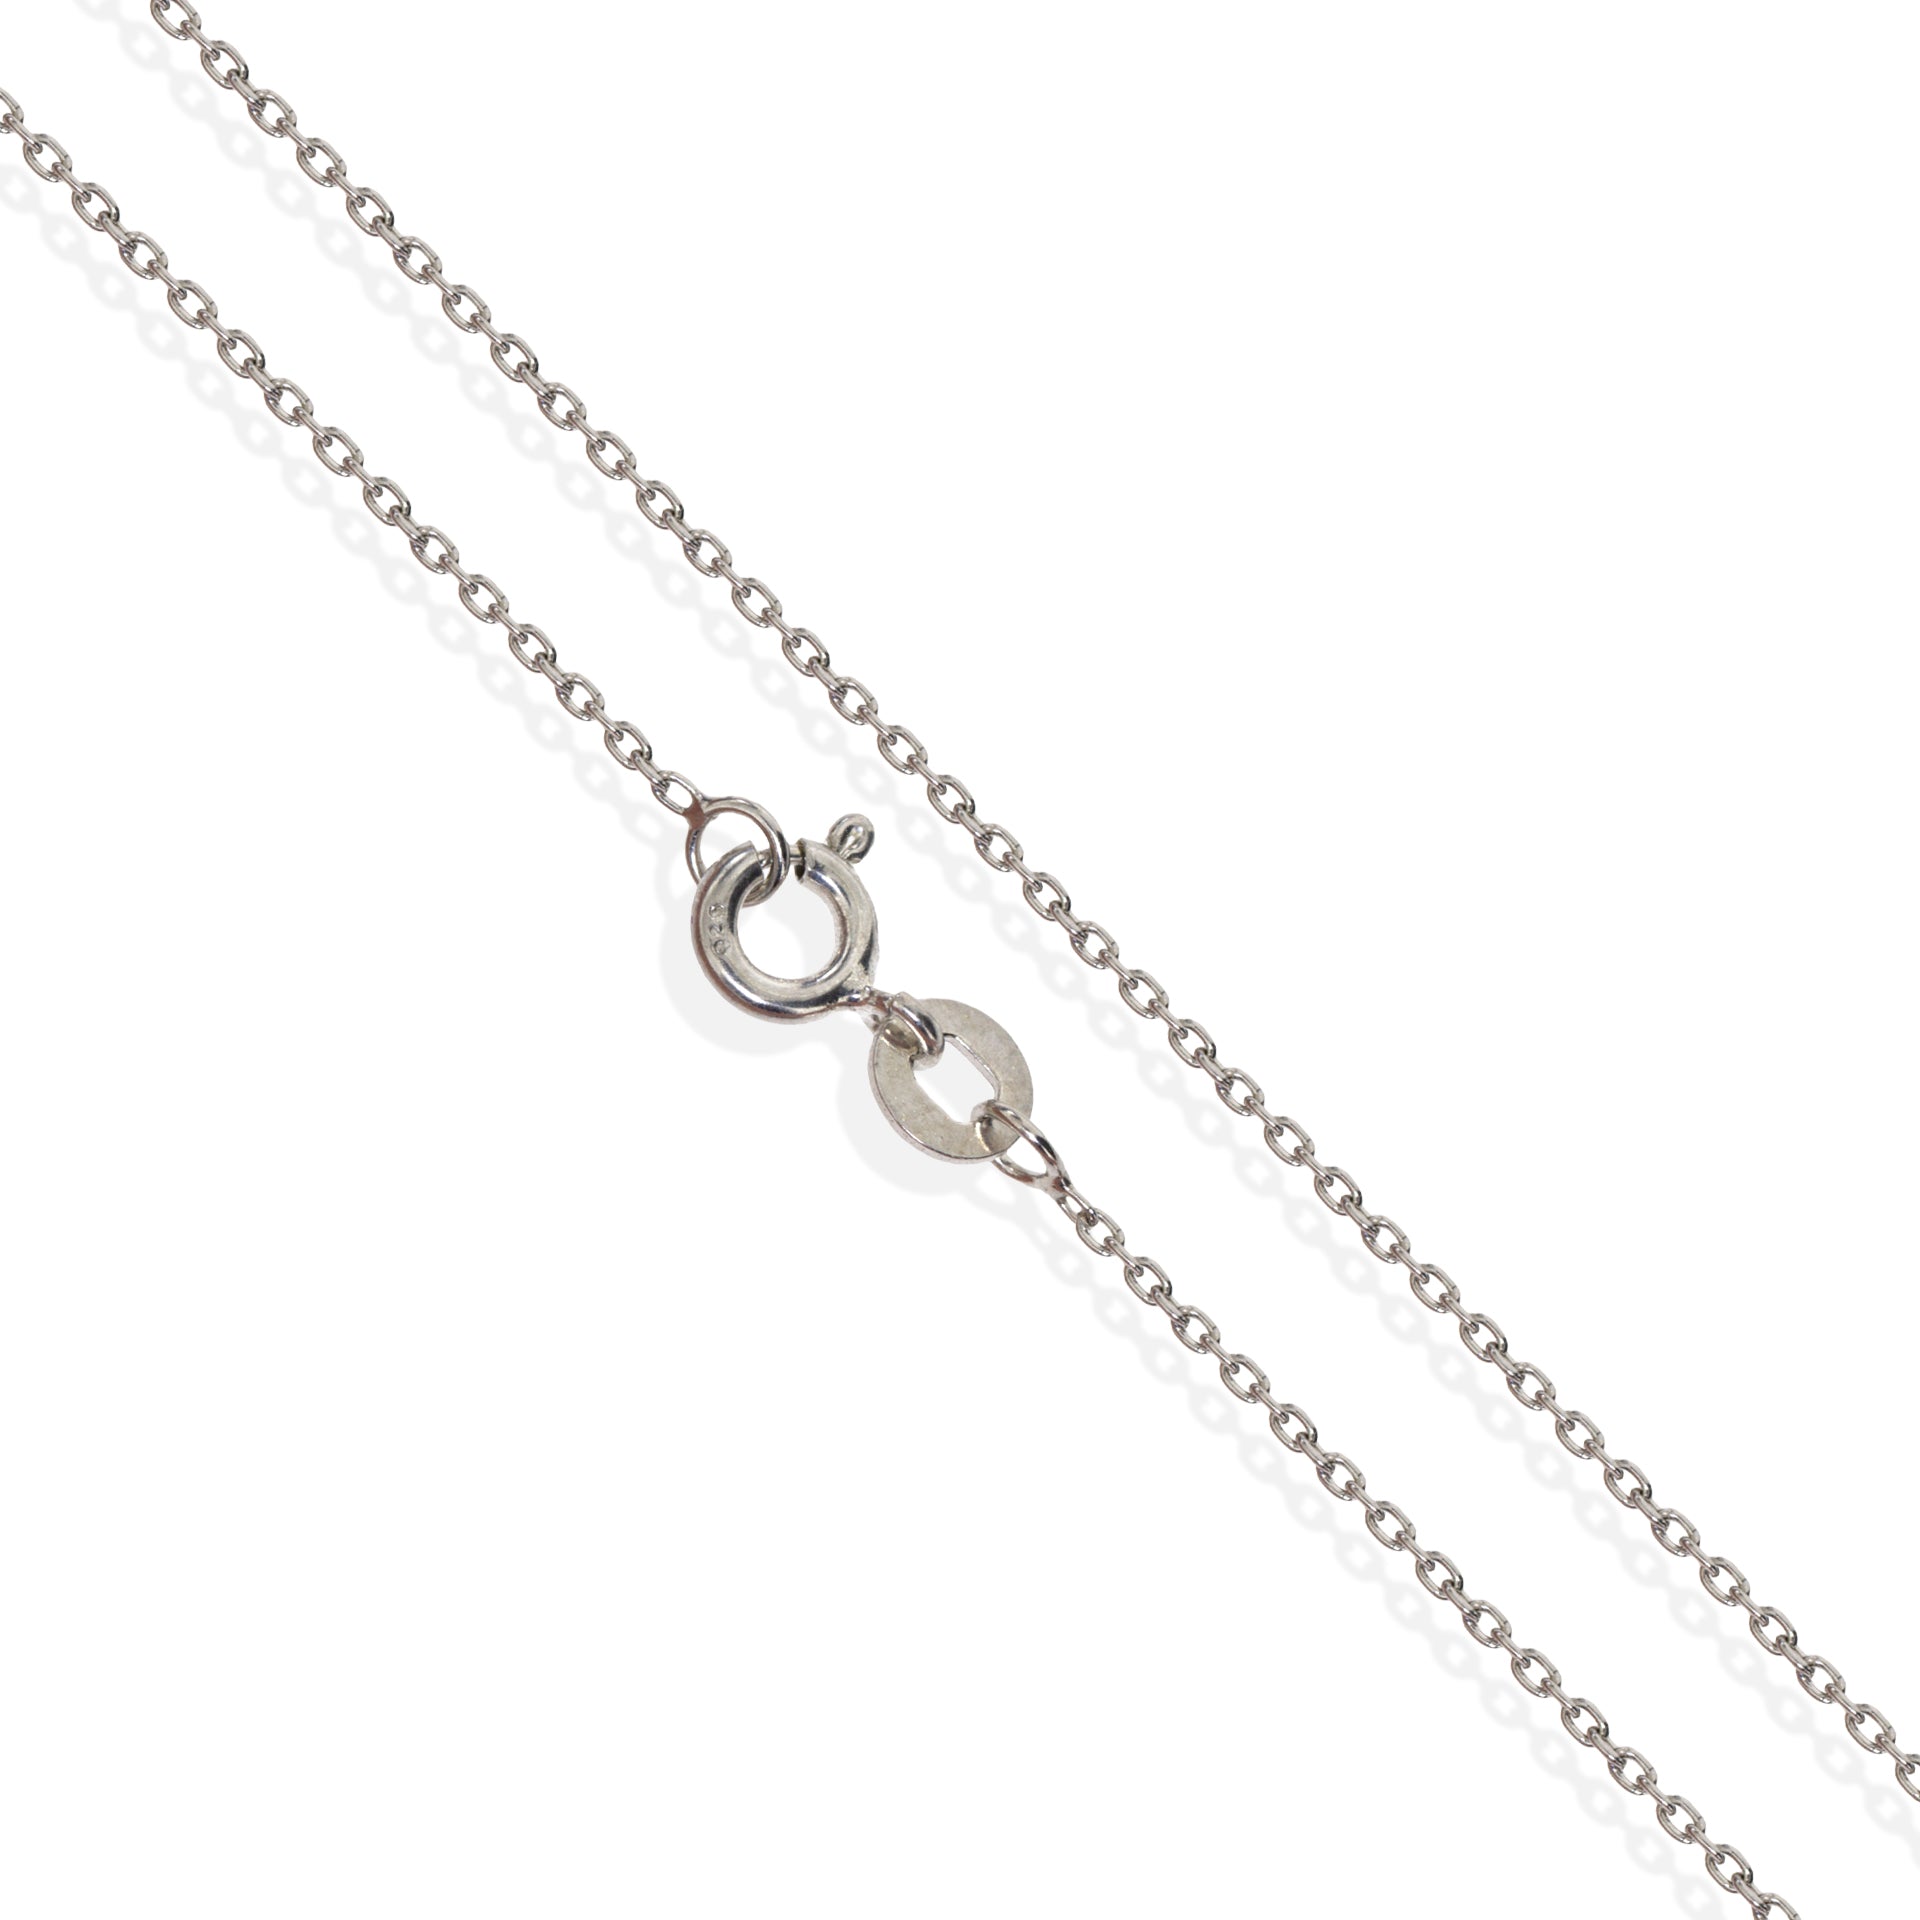 Gemvine Sterling Silver Circles Necklace Pendant